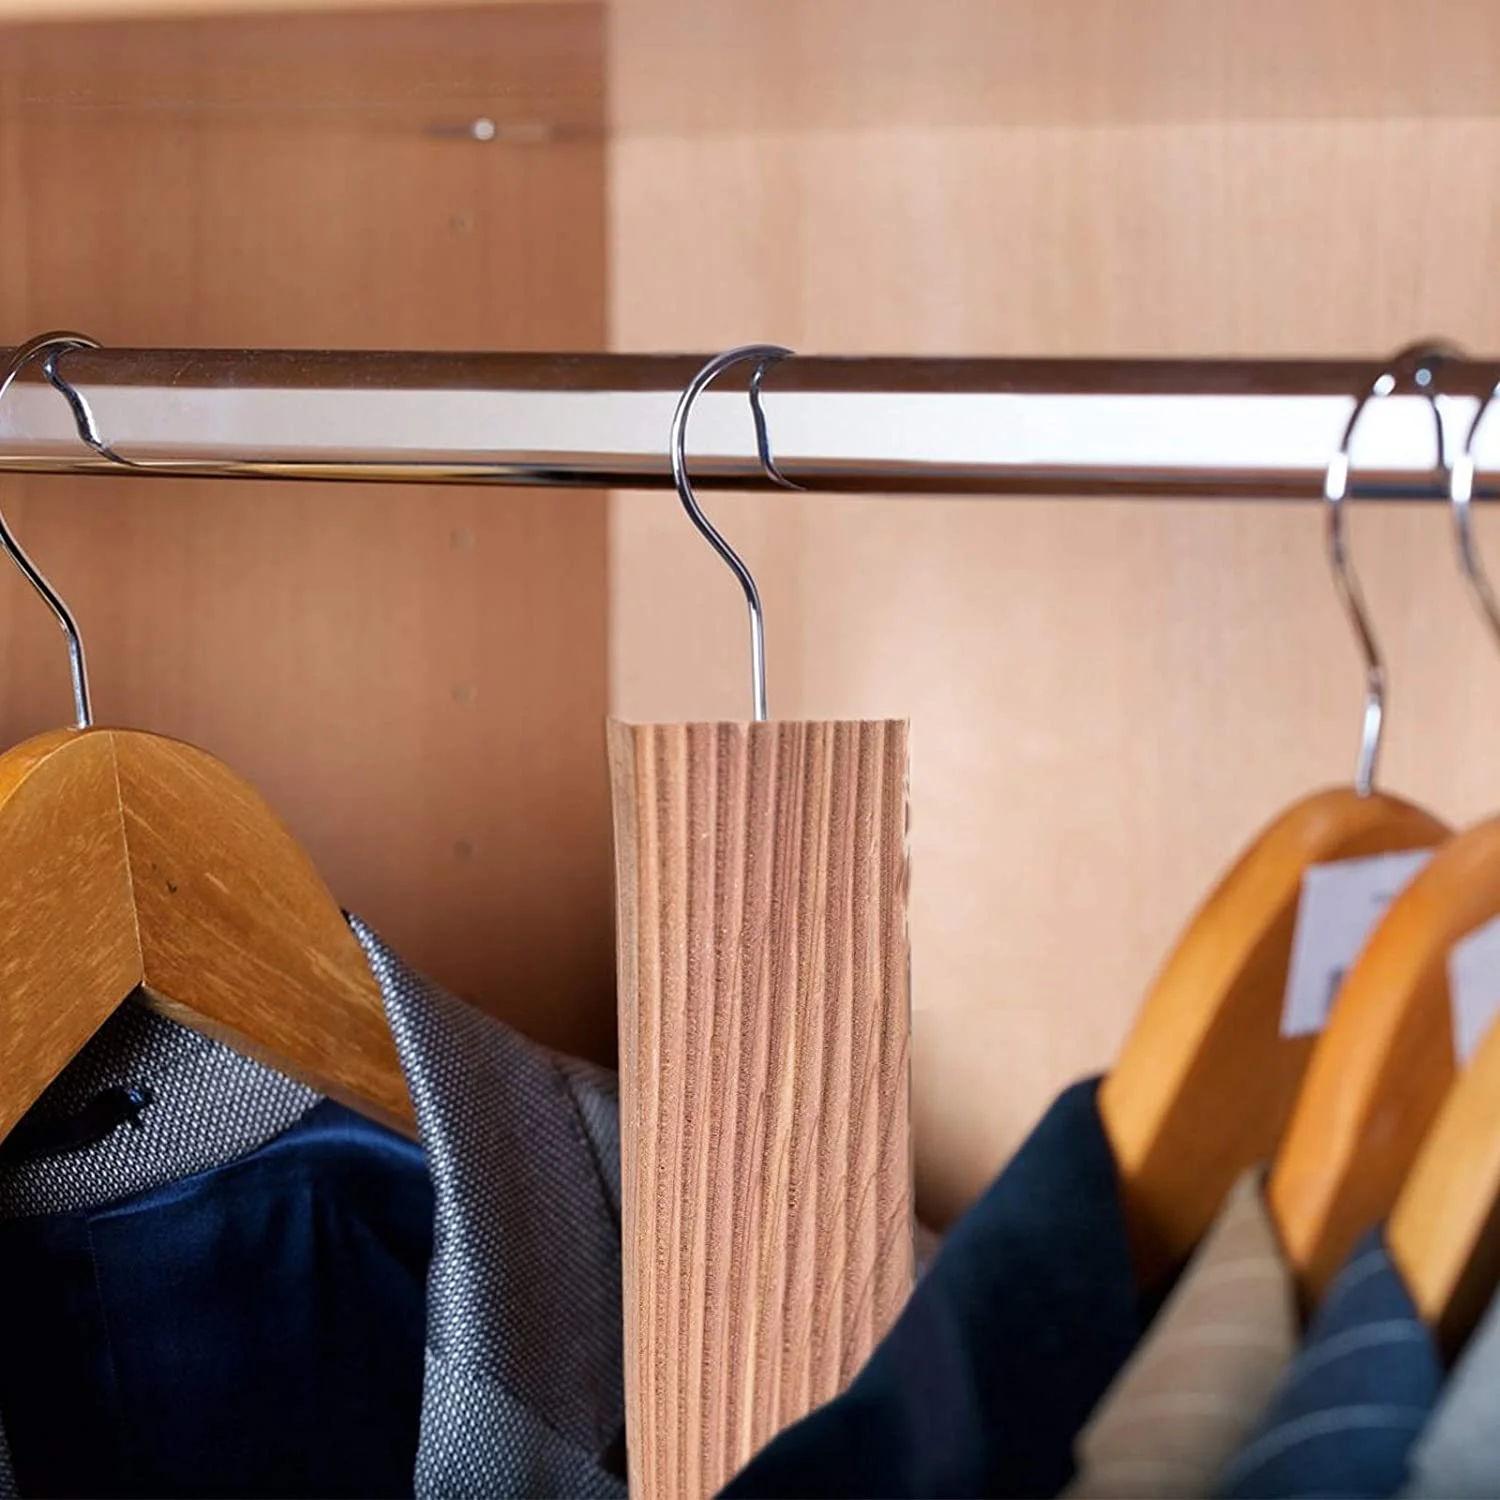 2020 factory sale red cedar block coats plank for clothes storage and cedar blocks cedar hangers for closet moth repellent